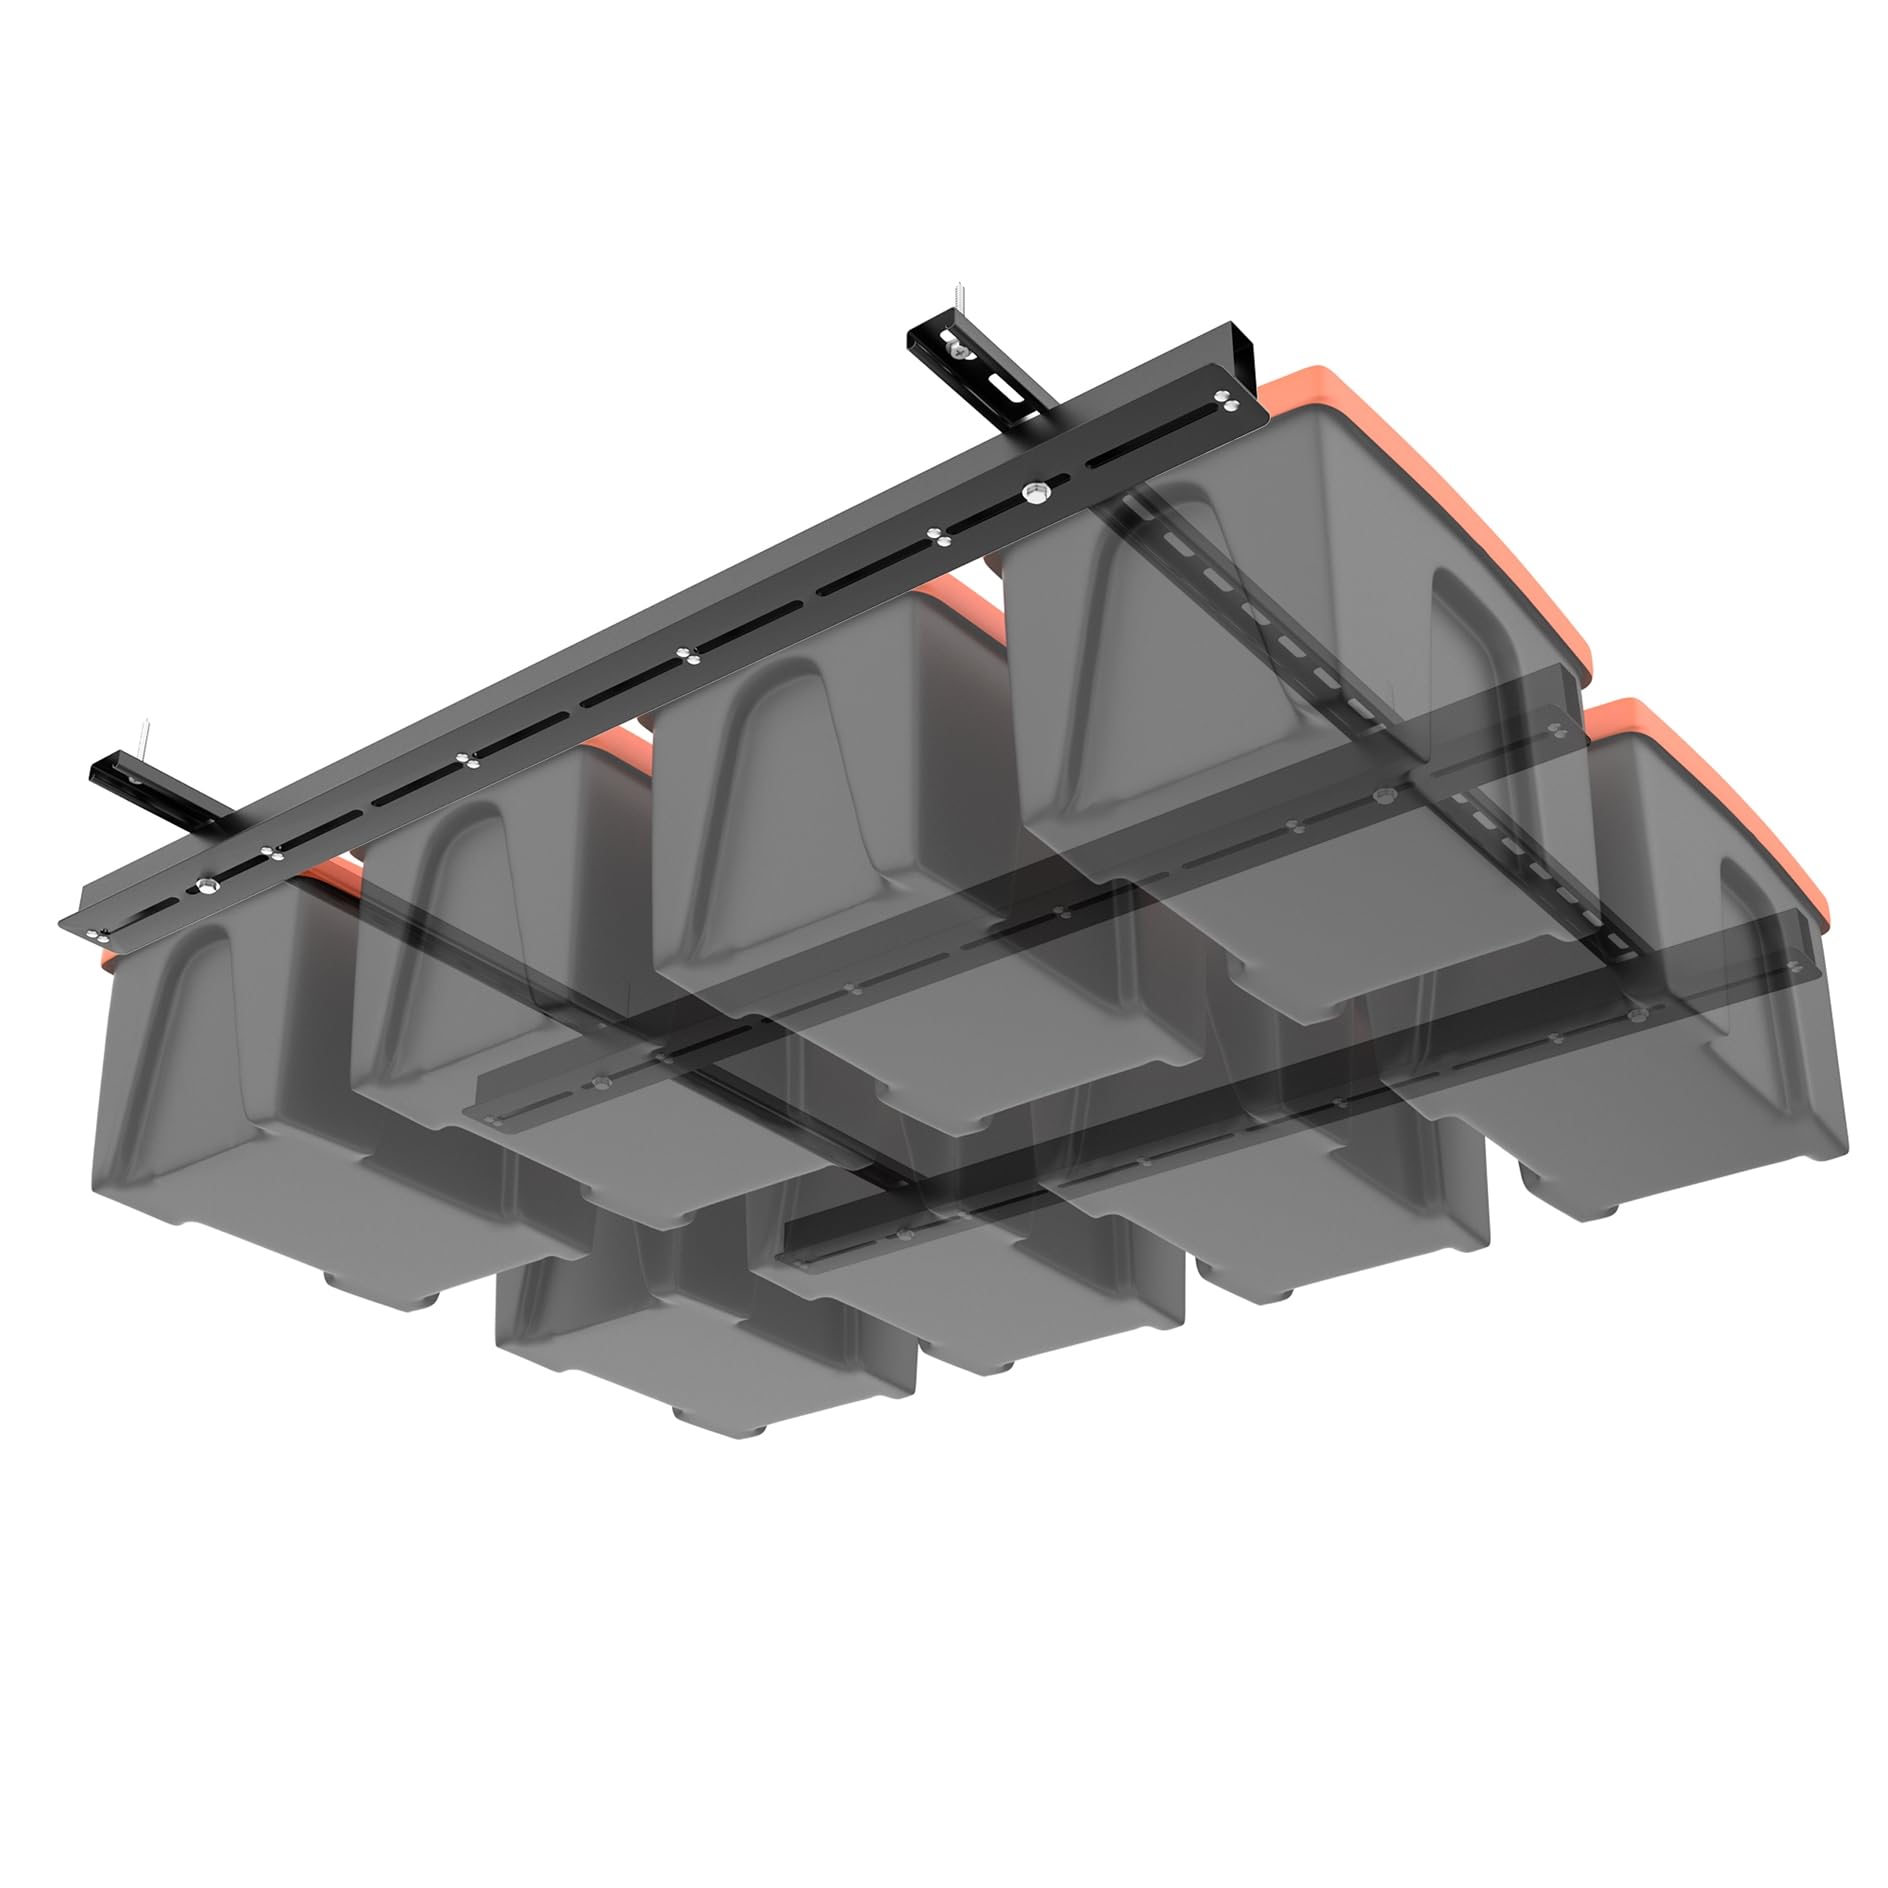 TORACK Garage Ceiling Bin Storage Rack, Overhead Tote Storage Rail System Heavy Duty Adjustable Tote Slide Garage Storage System(Bins are not included)